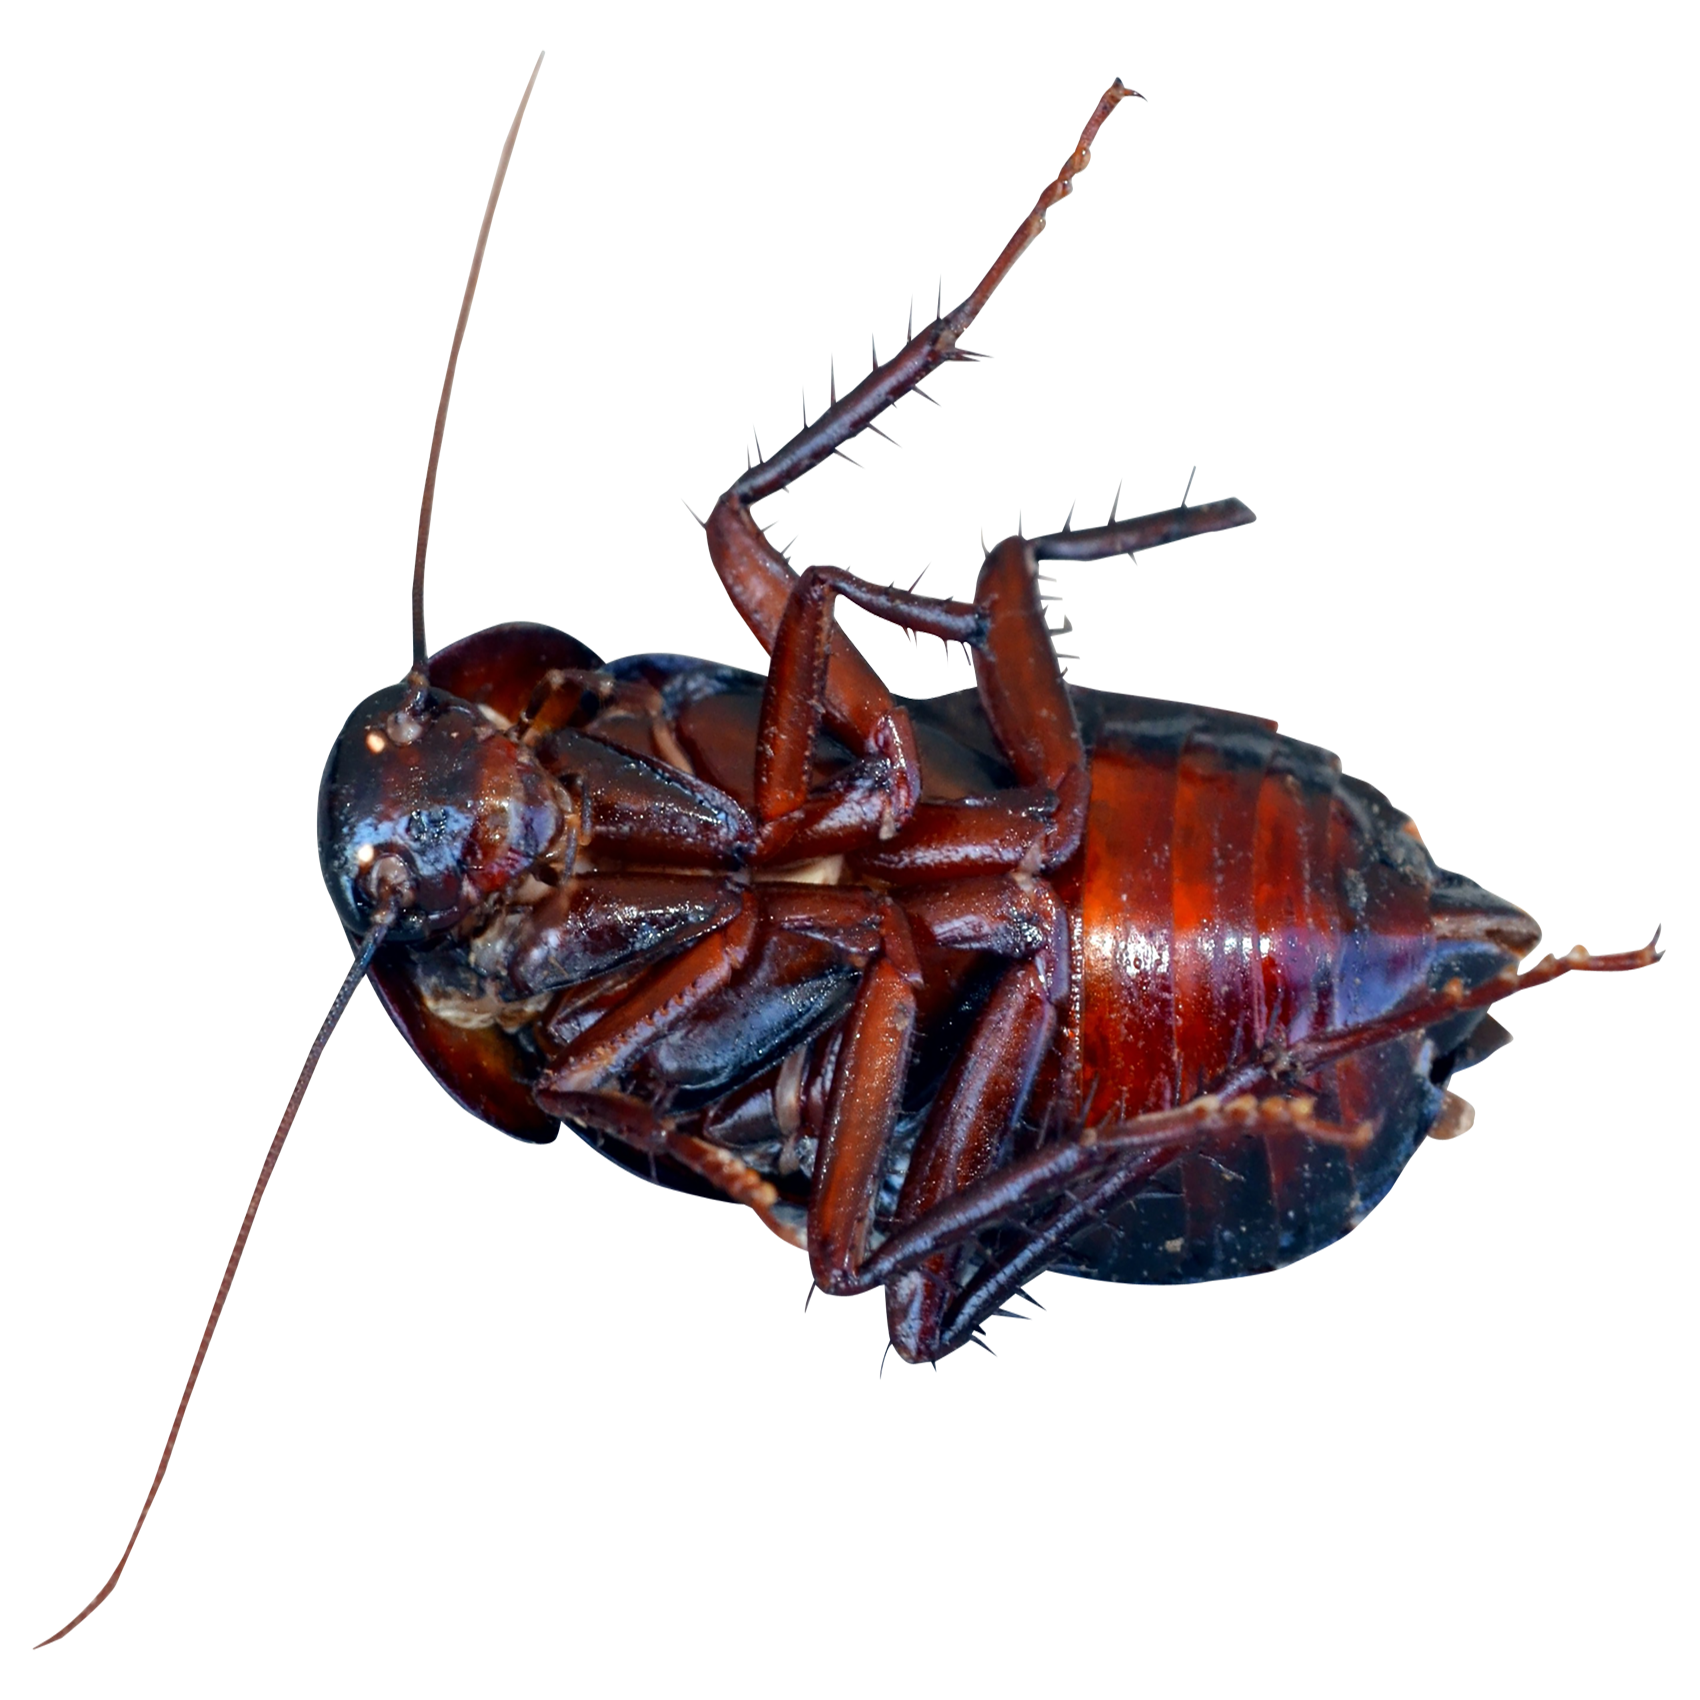 Cockroach Transparent Image